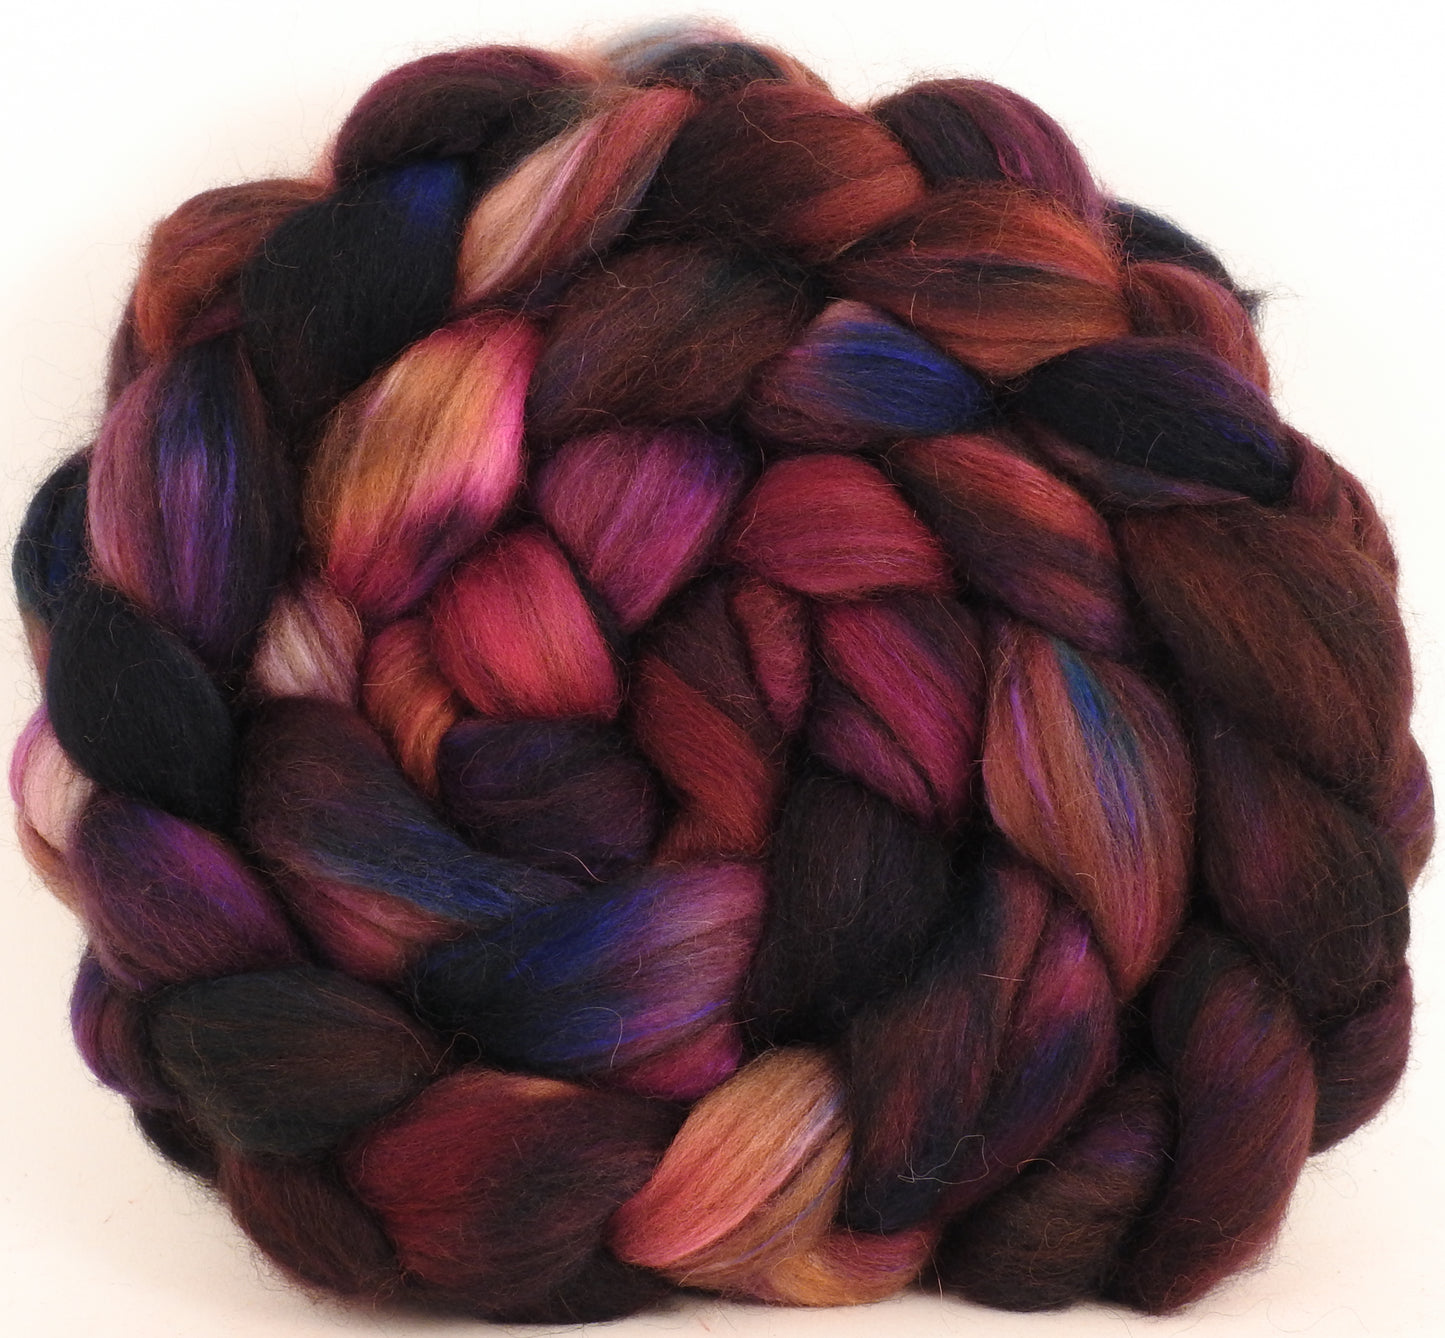 Hand dyed top for spinning -Heartbeat  - 18.5 mic merino/ camel/ brown alpaca/ mulberry silk/ (40/20/20/20) - Inglenook Fibers